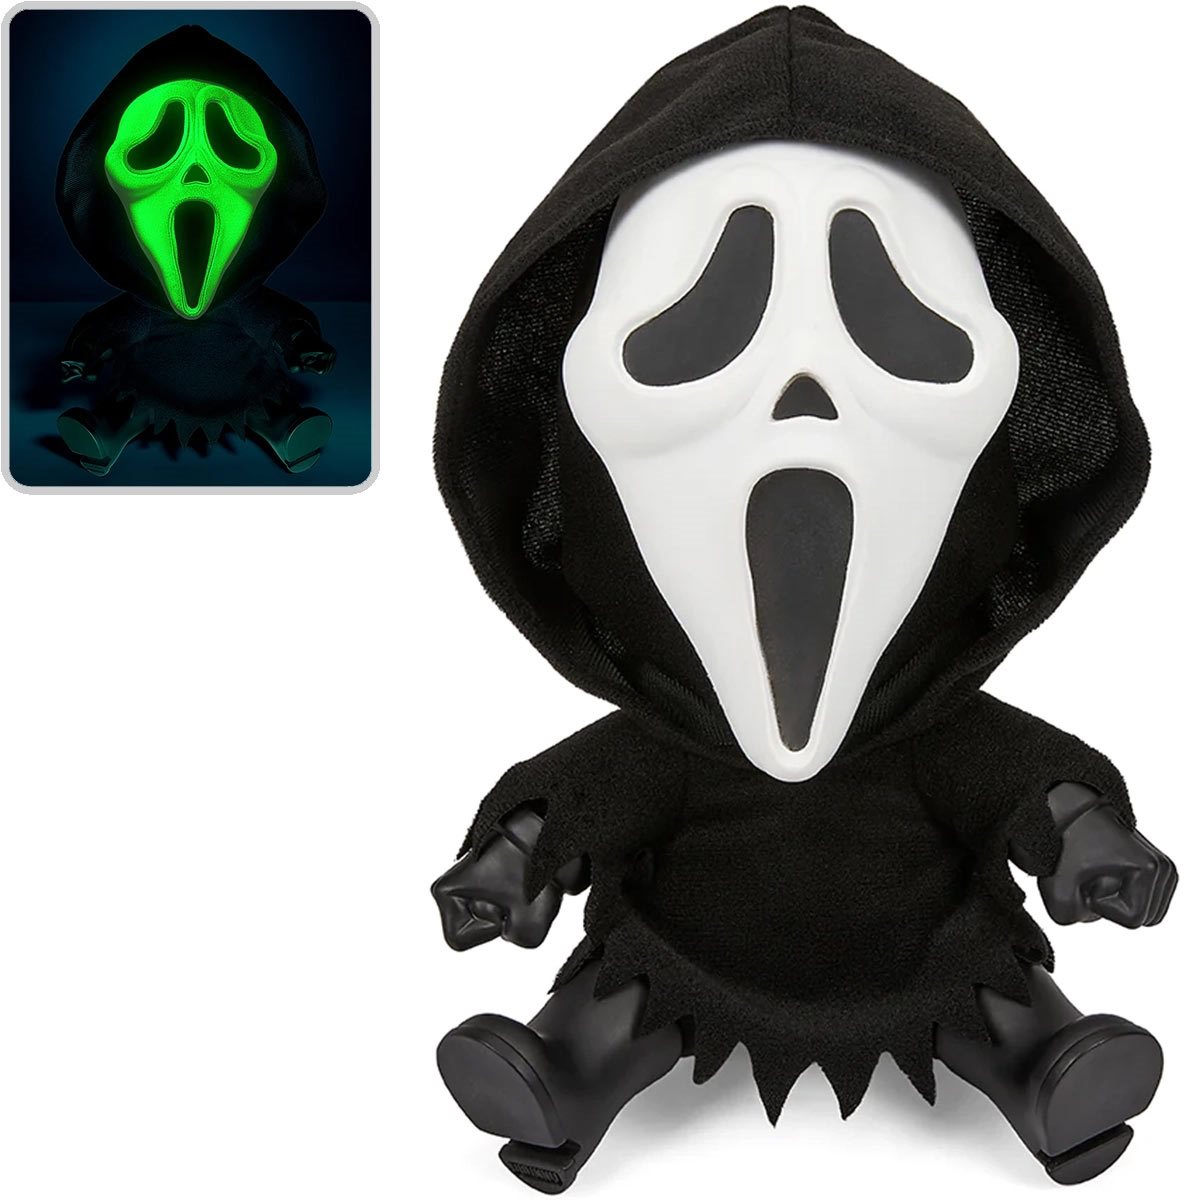  Kidrobot Ghost Face 8 Inch Phunny Plush : Kidrobot: Toys & Games